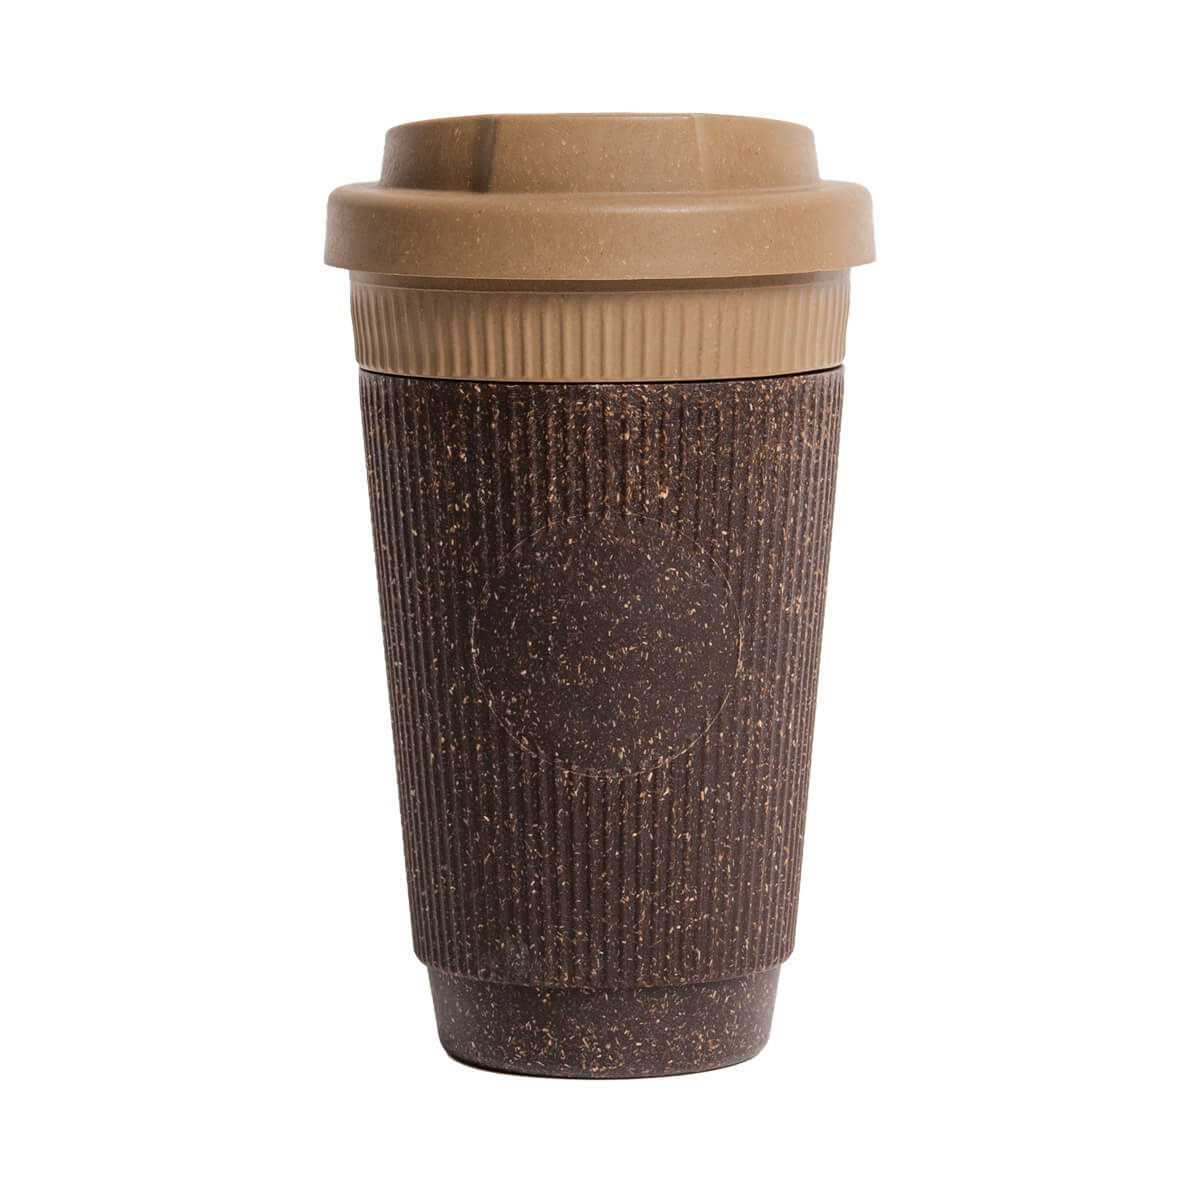 Freisteller Kaffeeform Kaffeebecher to go Weducer Cup Refined in Cardamom